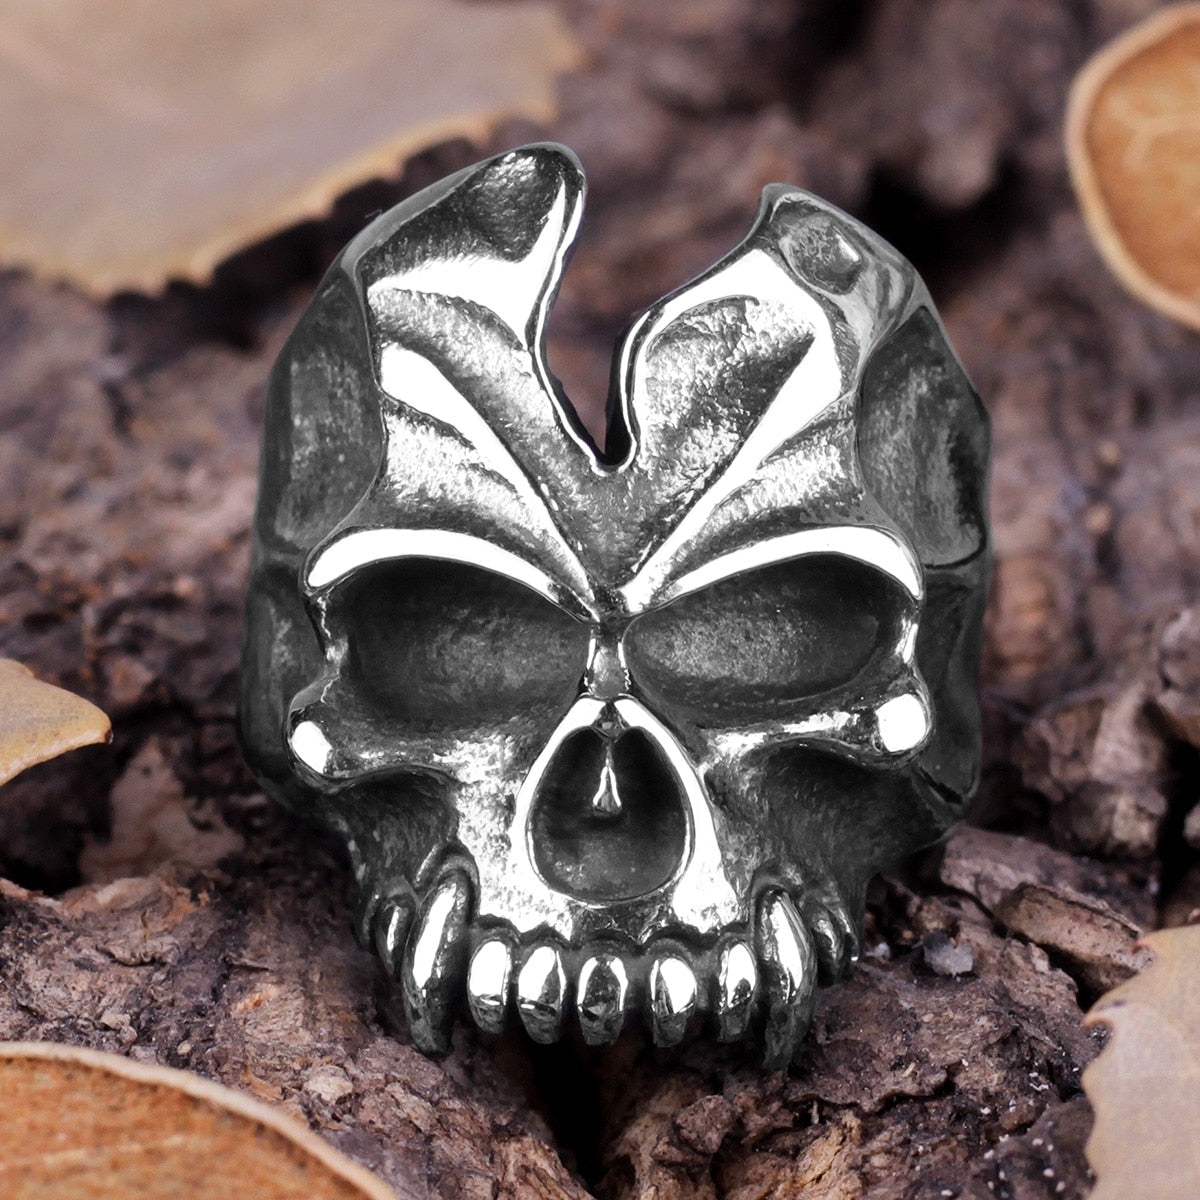 Busted Skull - Ring